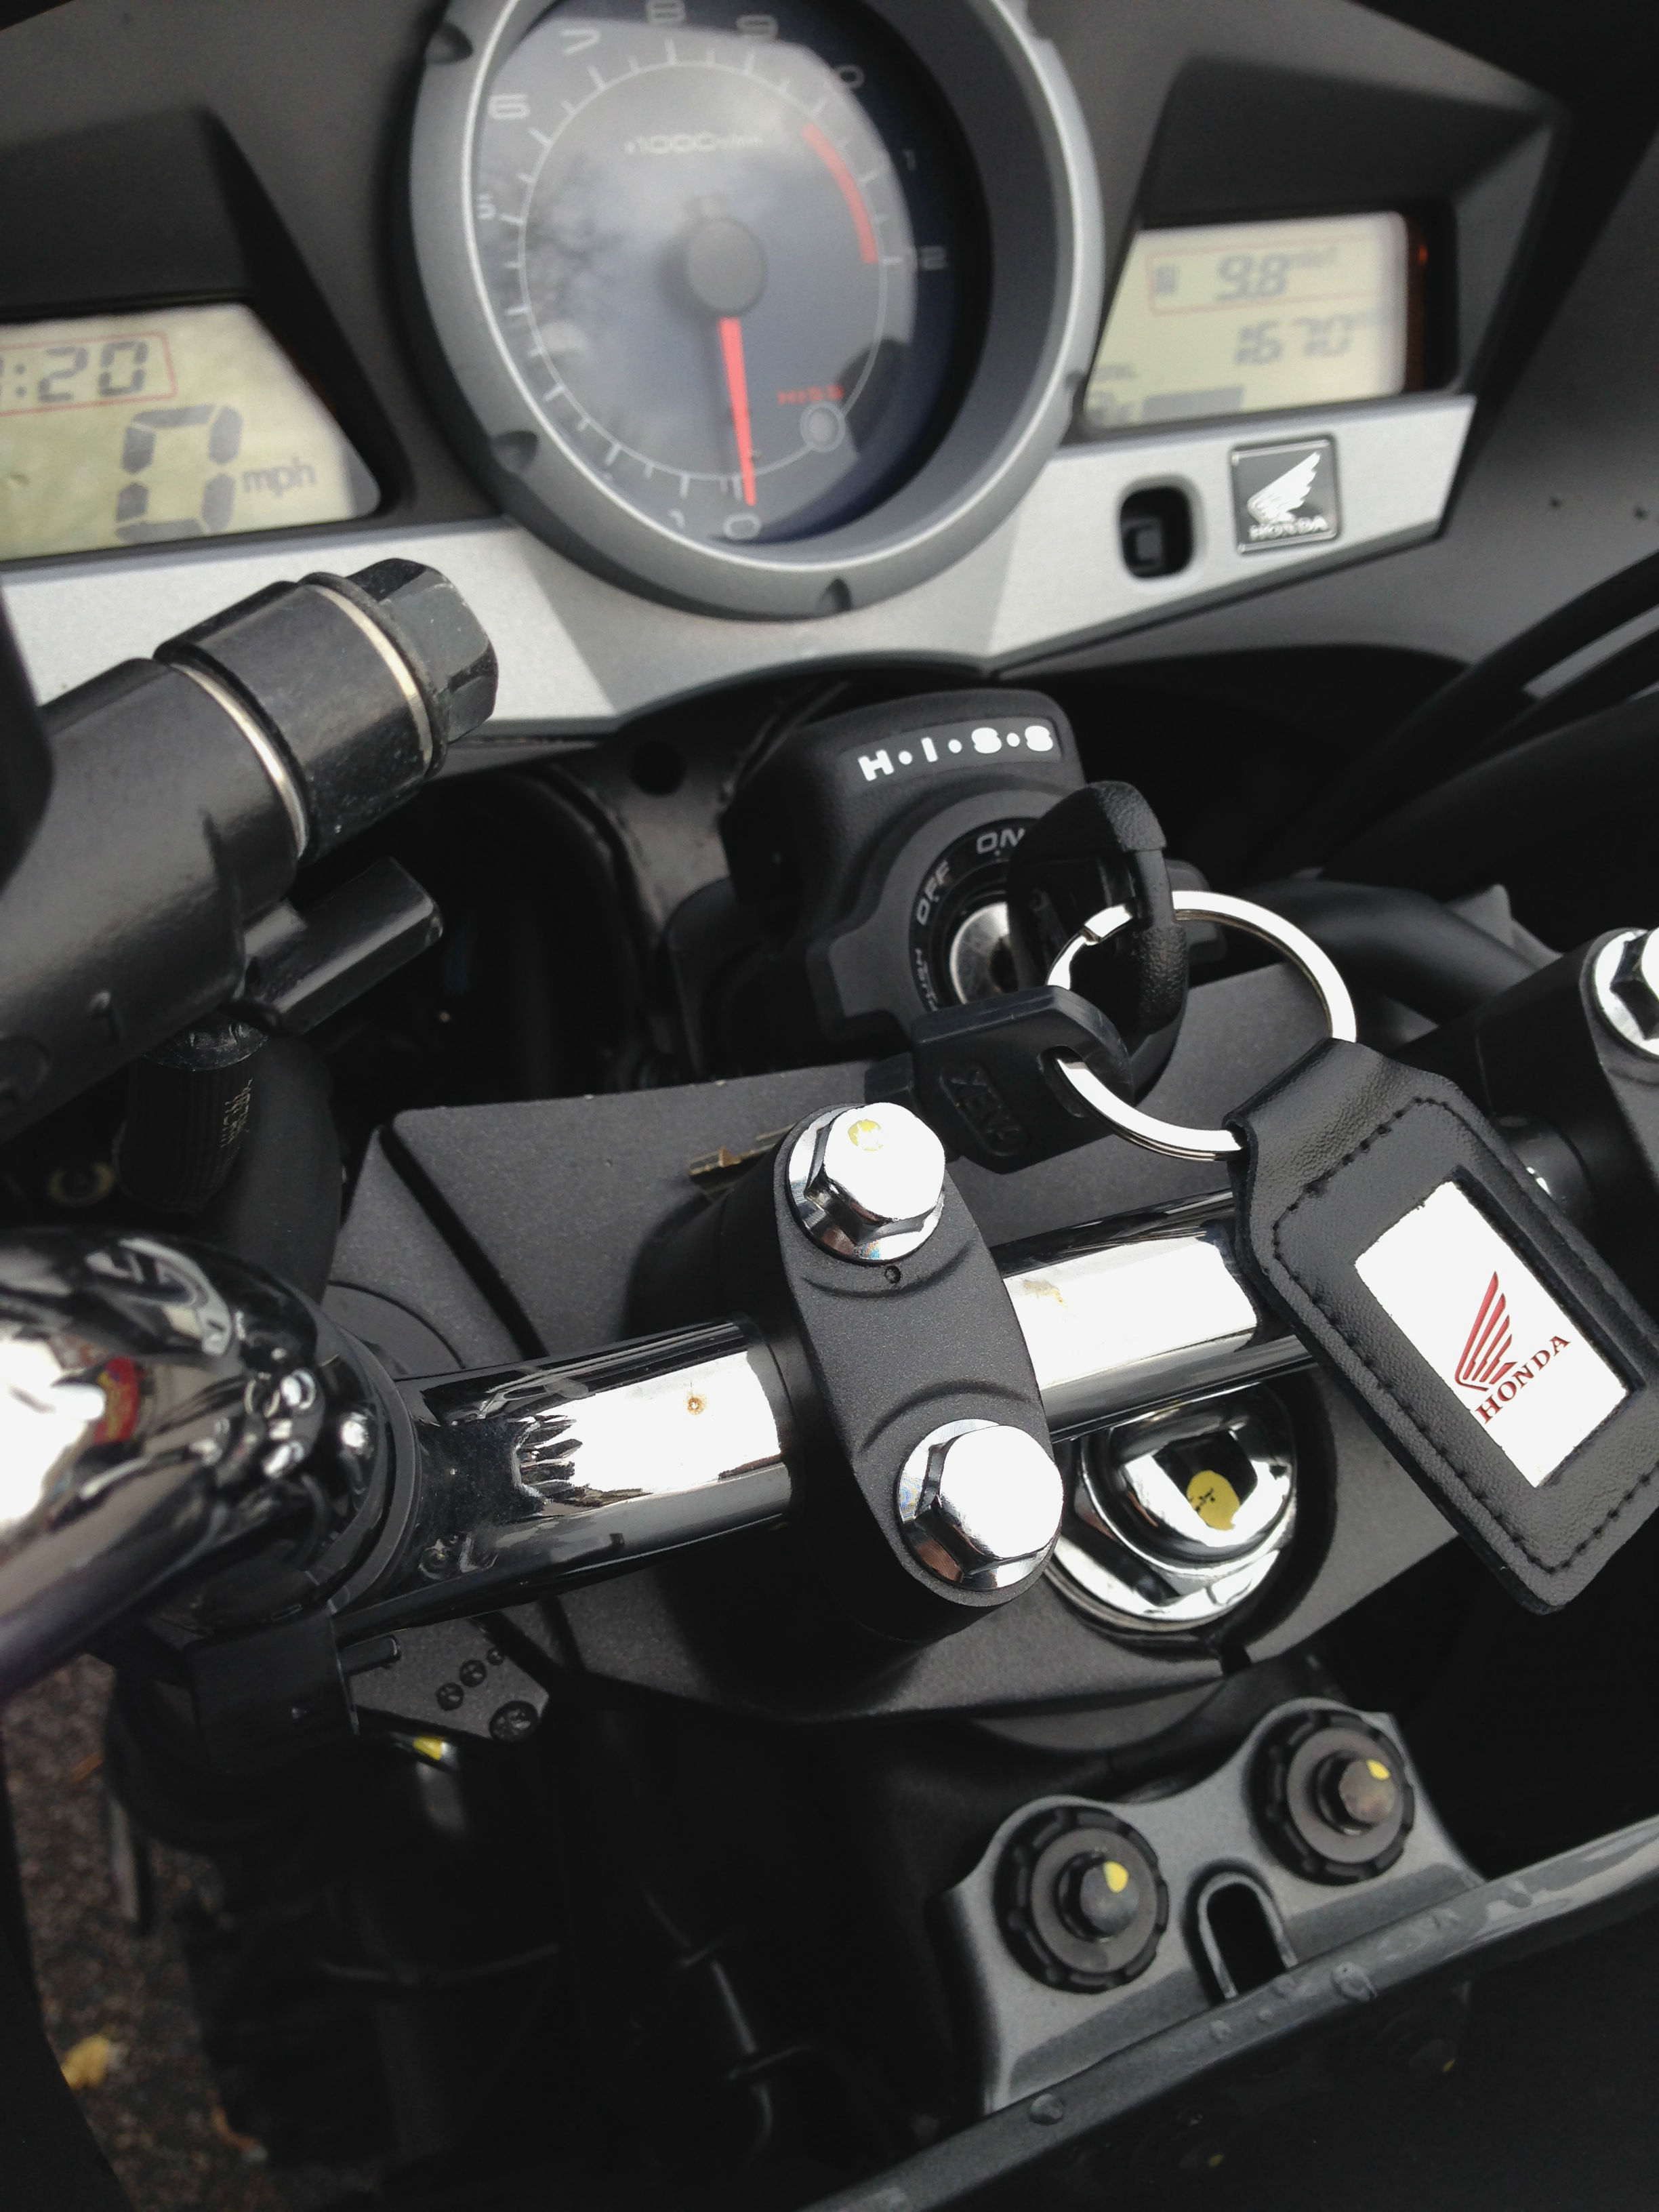 Road test: Honda CBF1000FA review